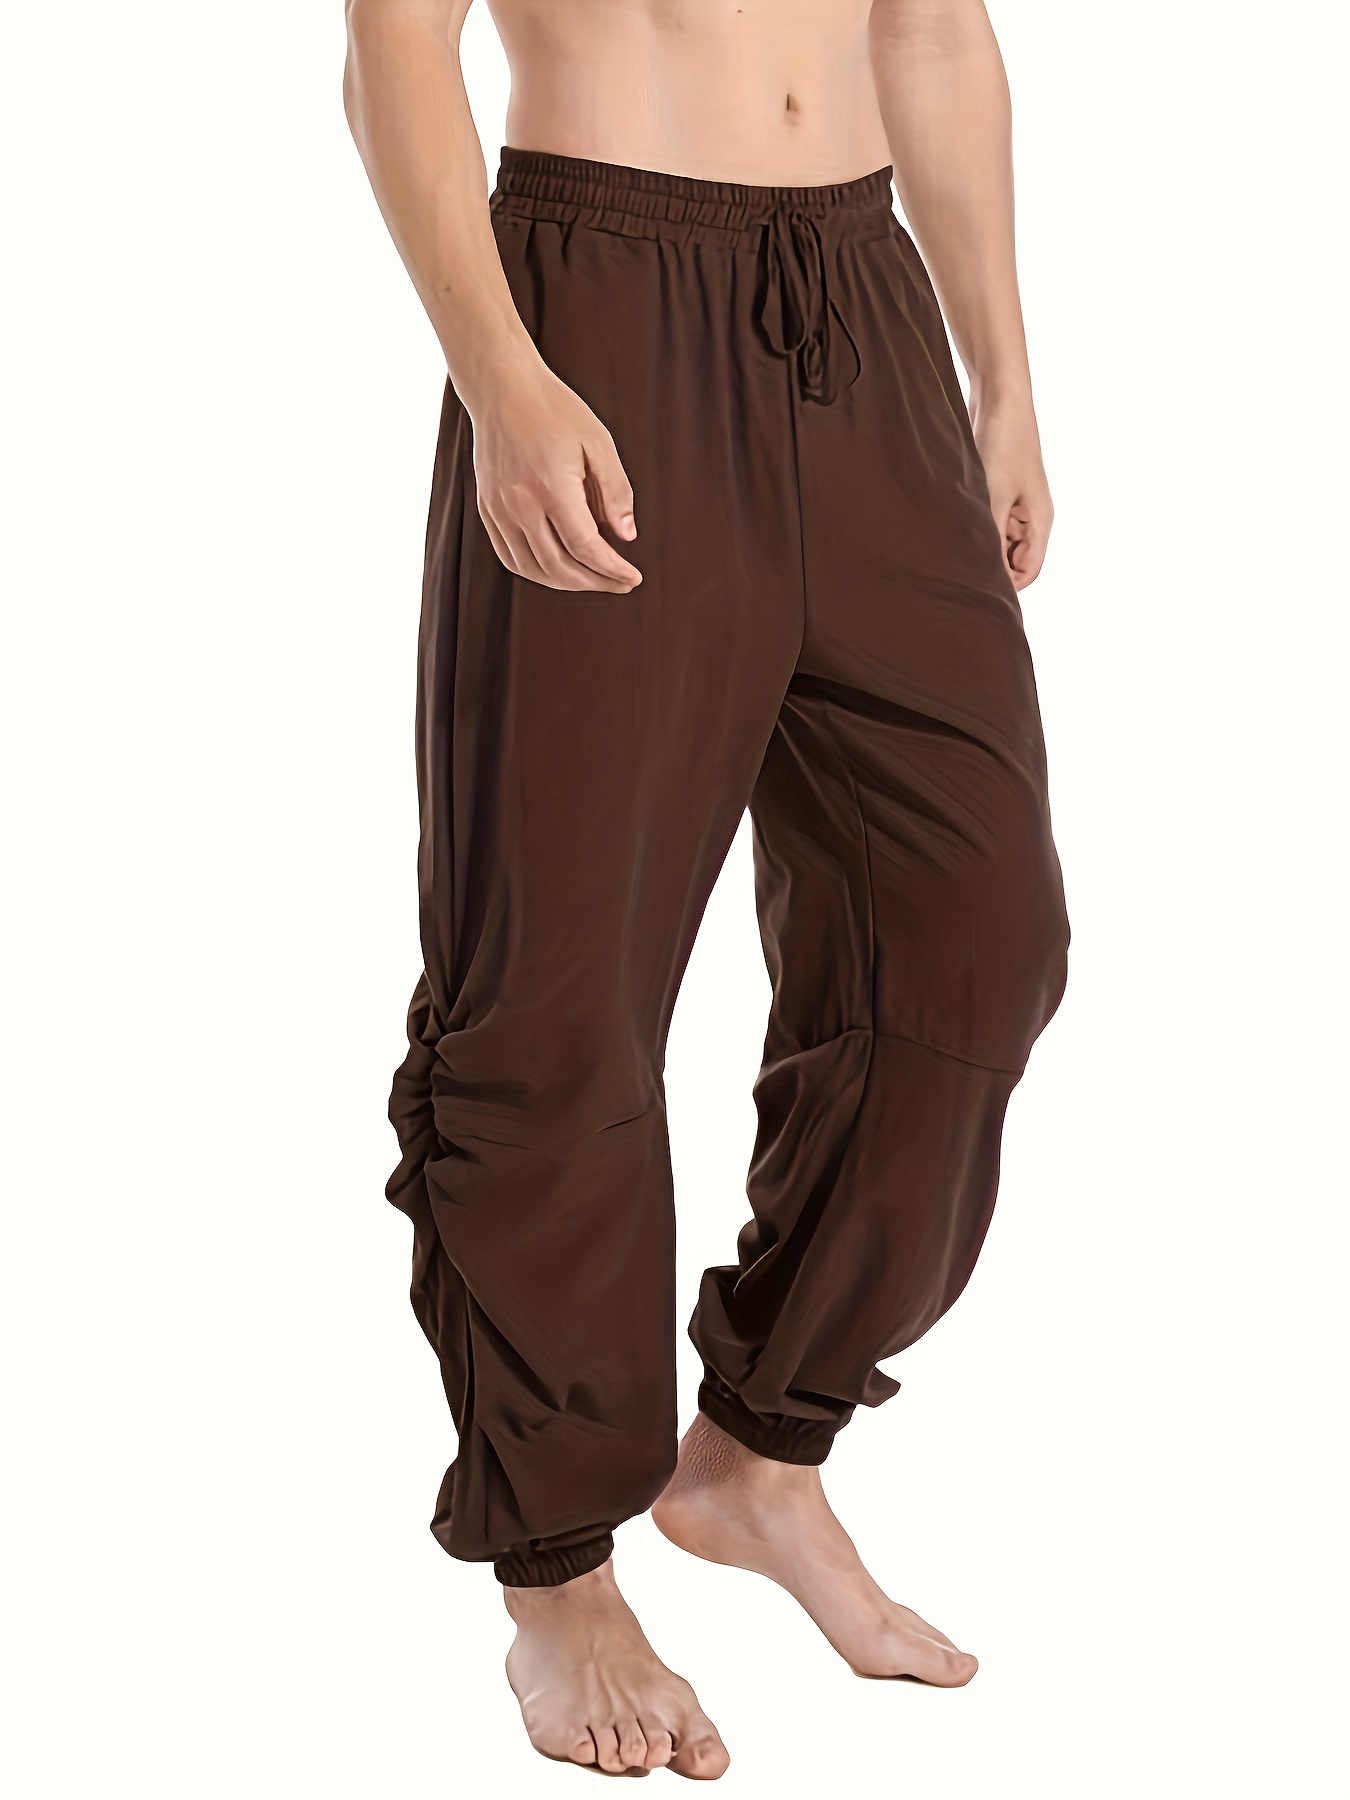 Short Harem Pants / Brown Drop Crotch Pants / Yoga Pants / Funky Pants 